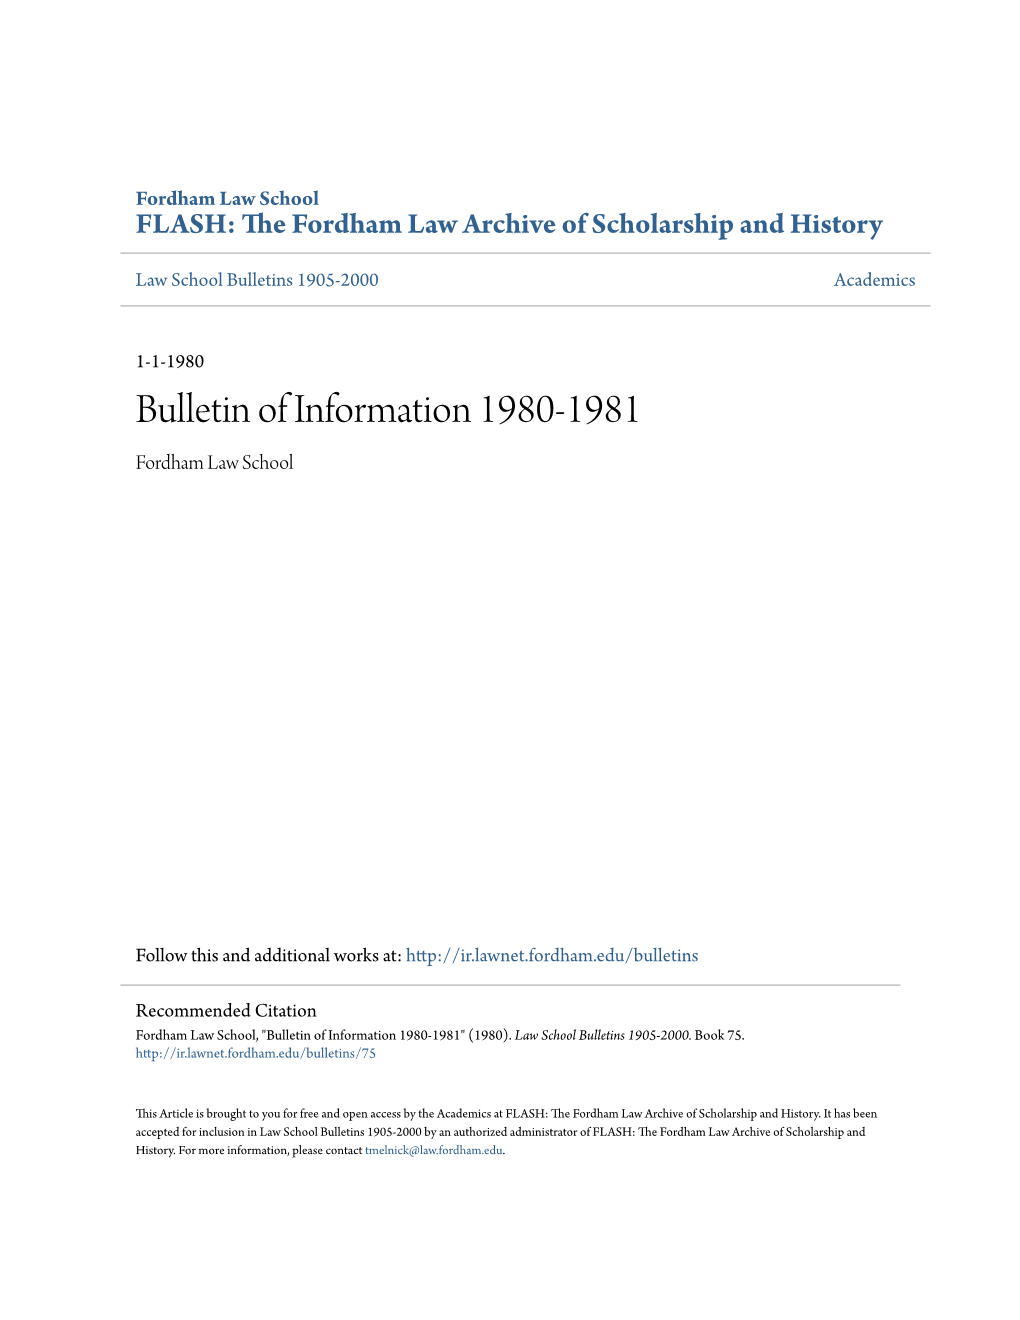 Bulletin of Information 1980-1981 Fordham Law School